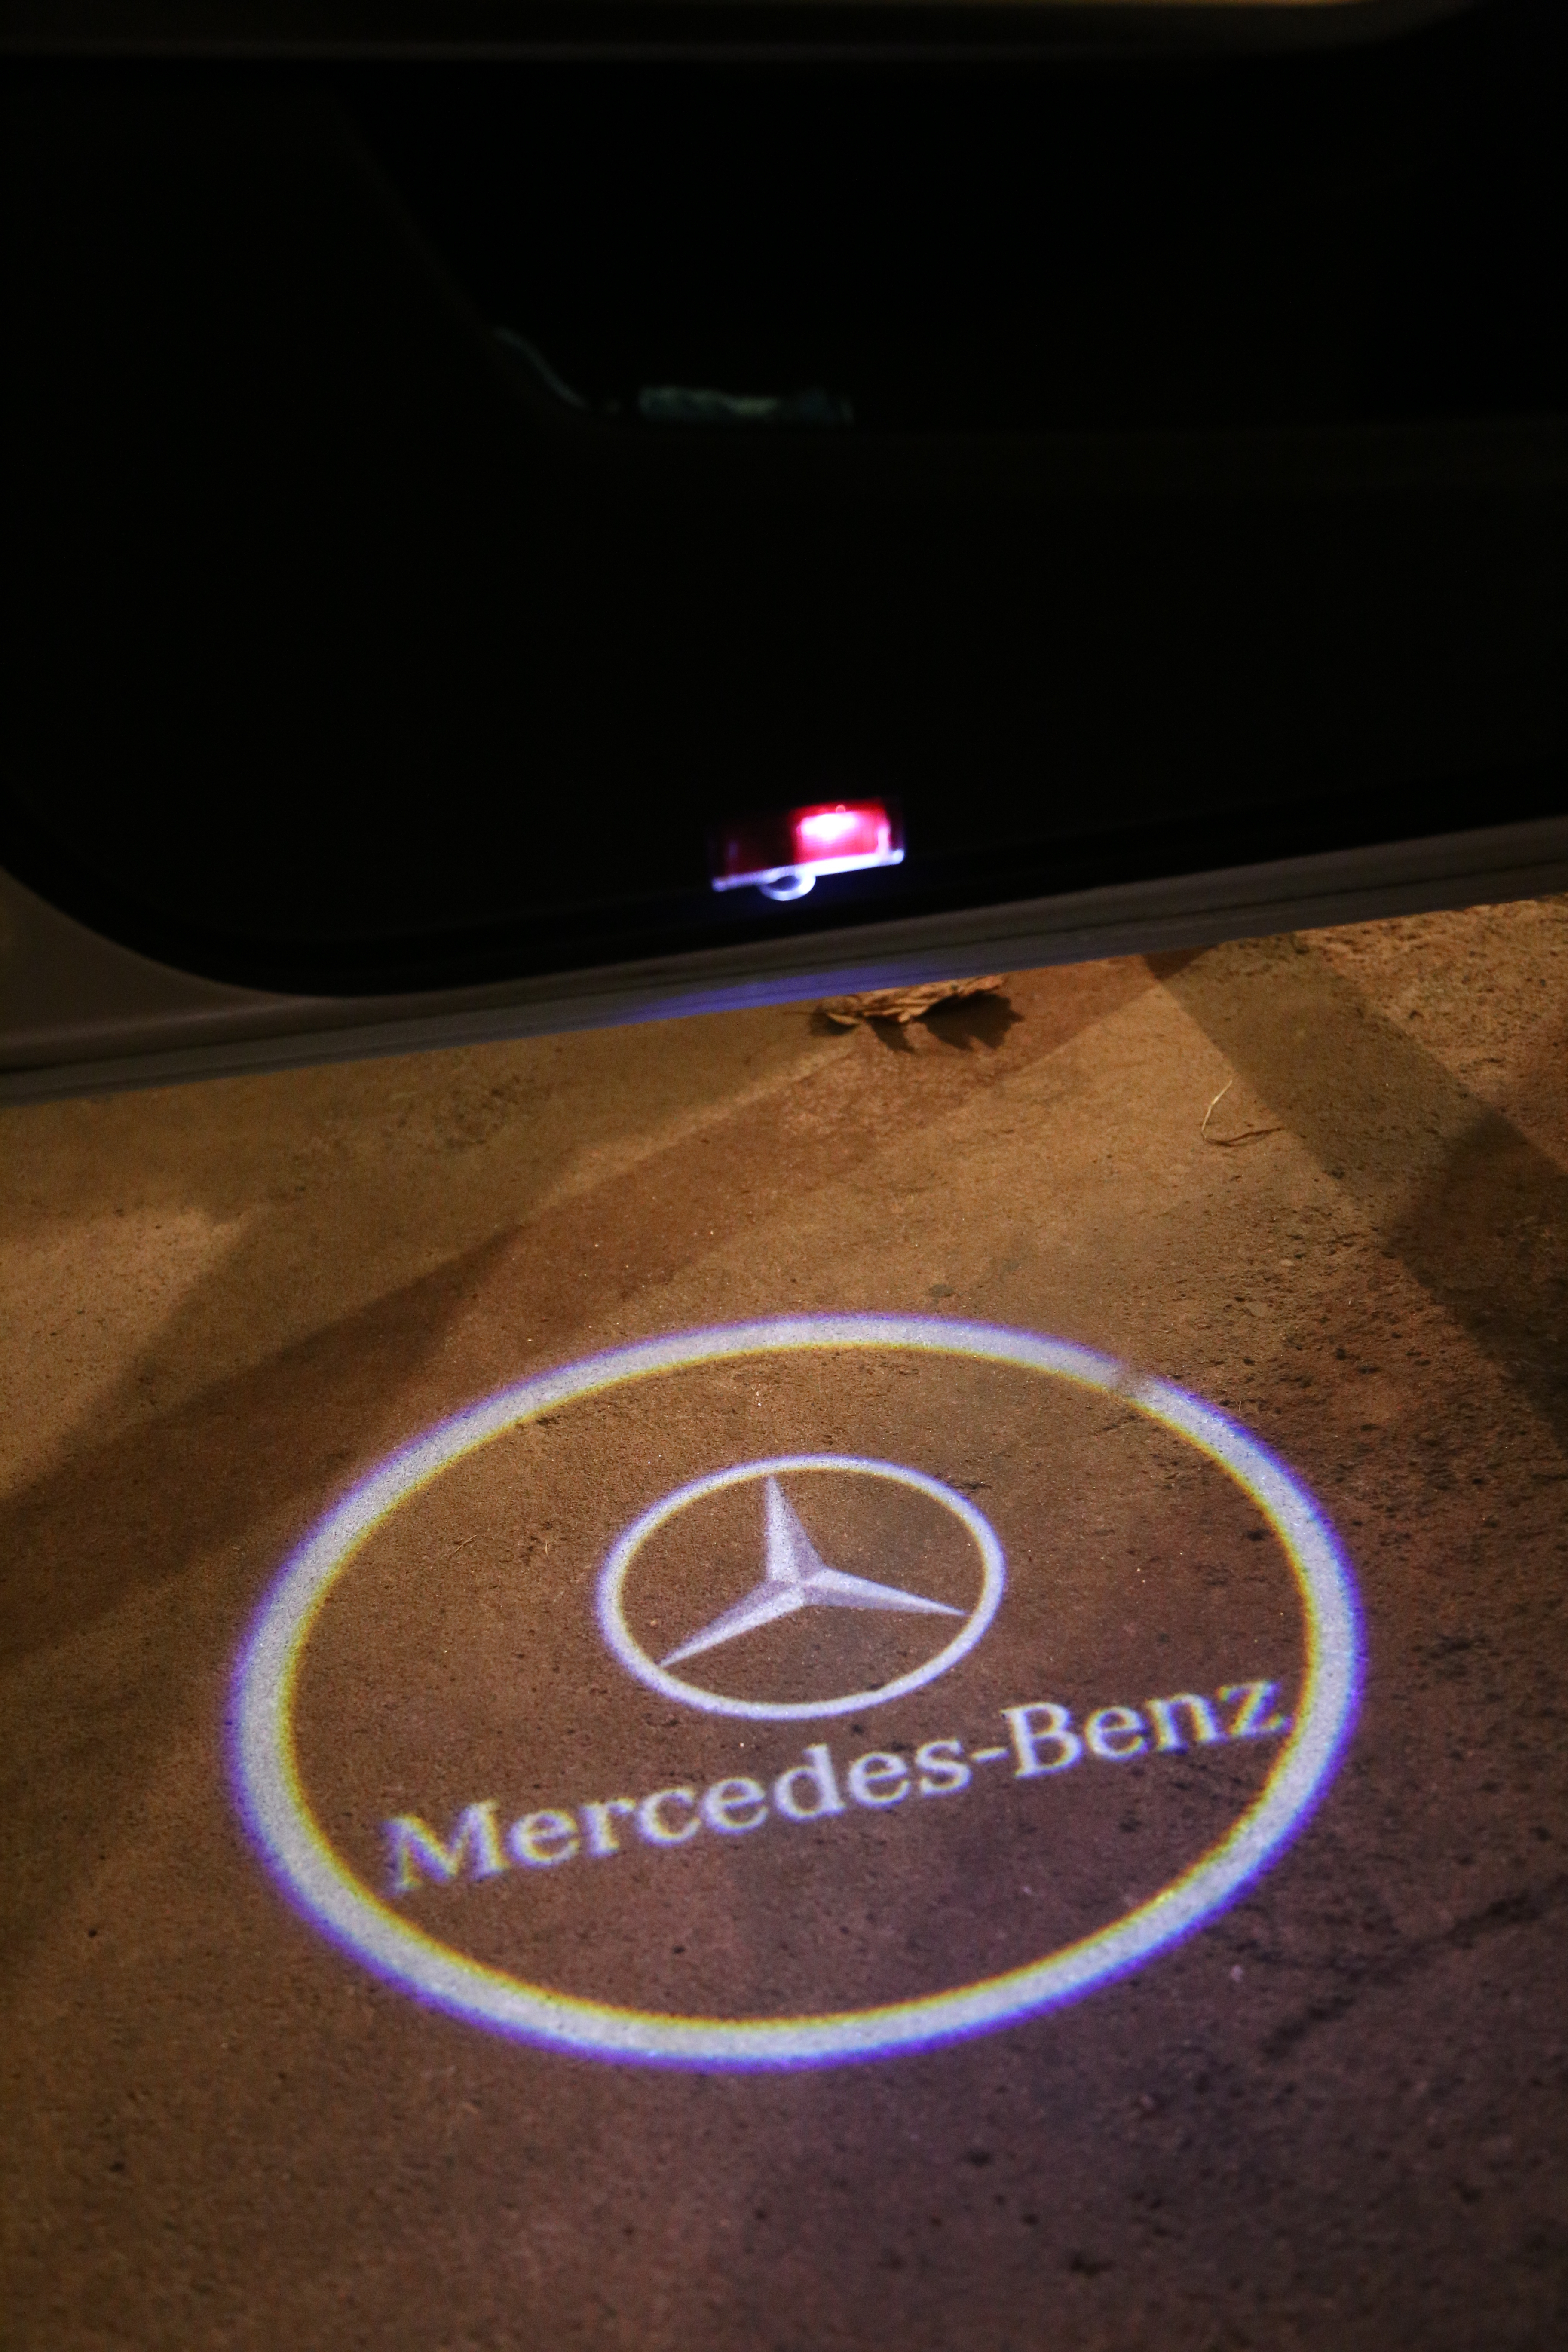 Mercedes-Benz star logo